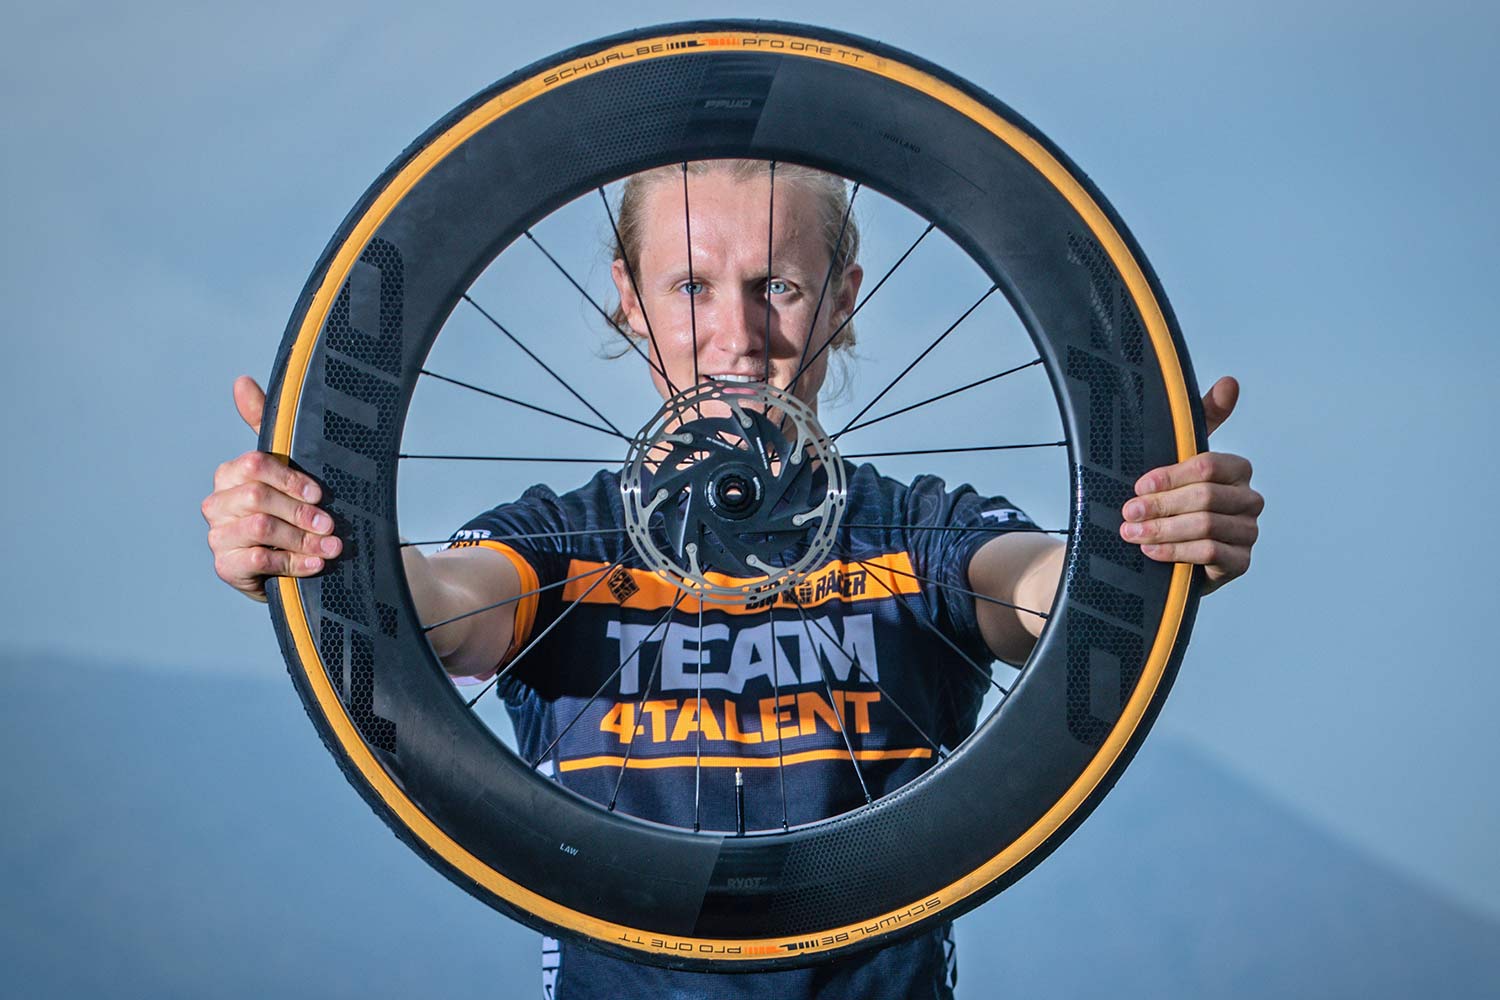 FFWD RYOT77 deep aero carbon tubeless disc brake TT time trial triathlon crit road wheels, Team 4Talent